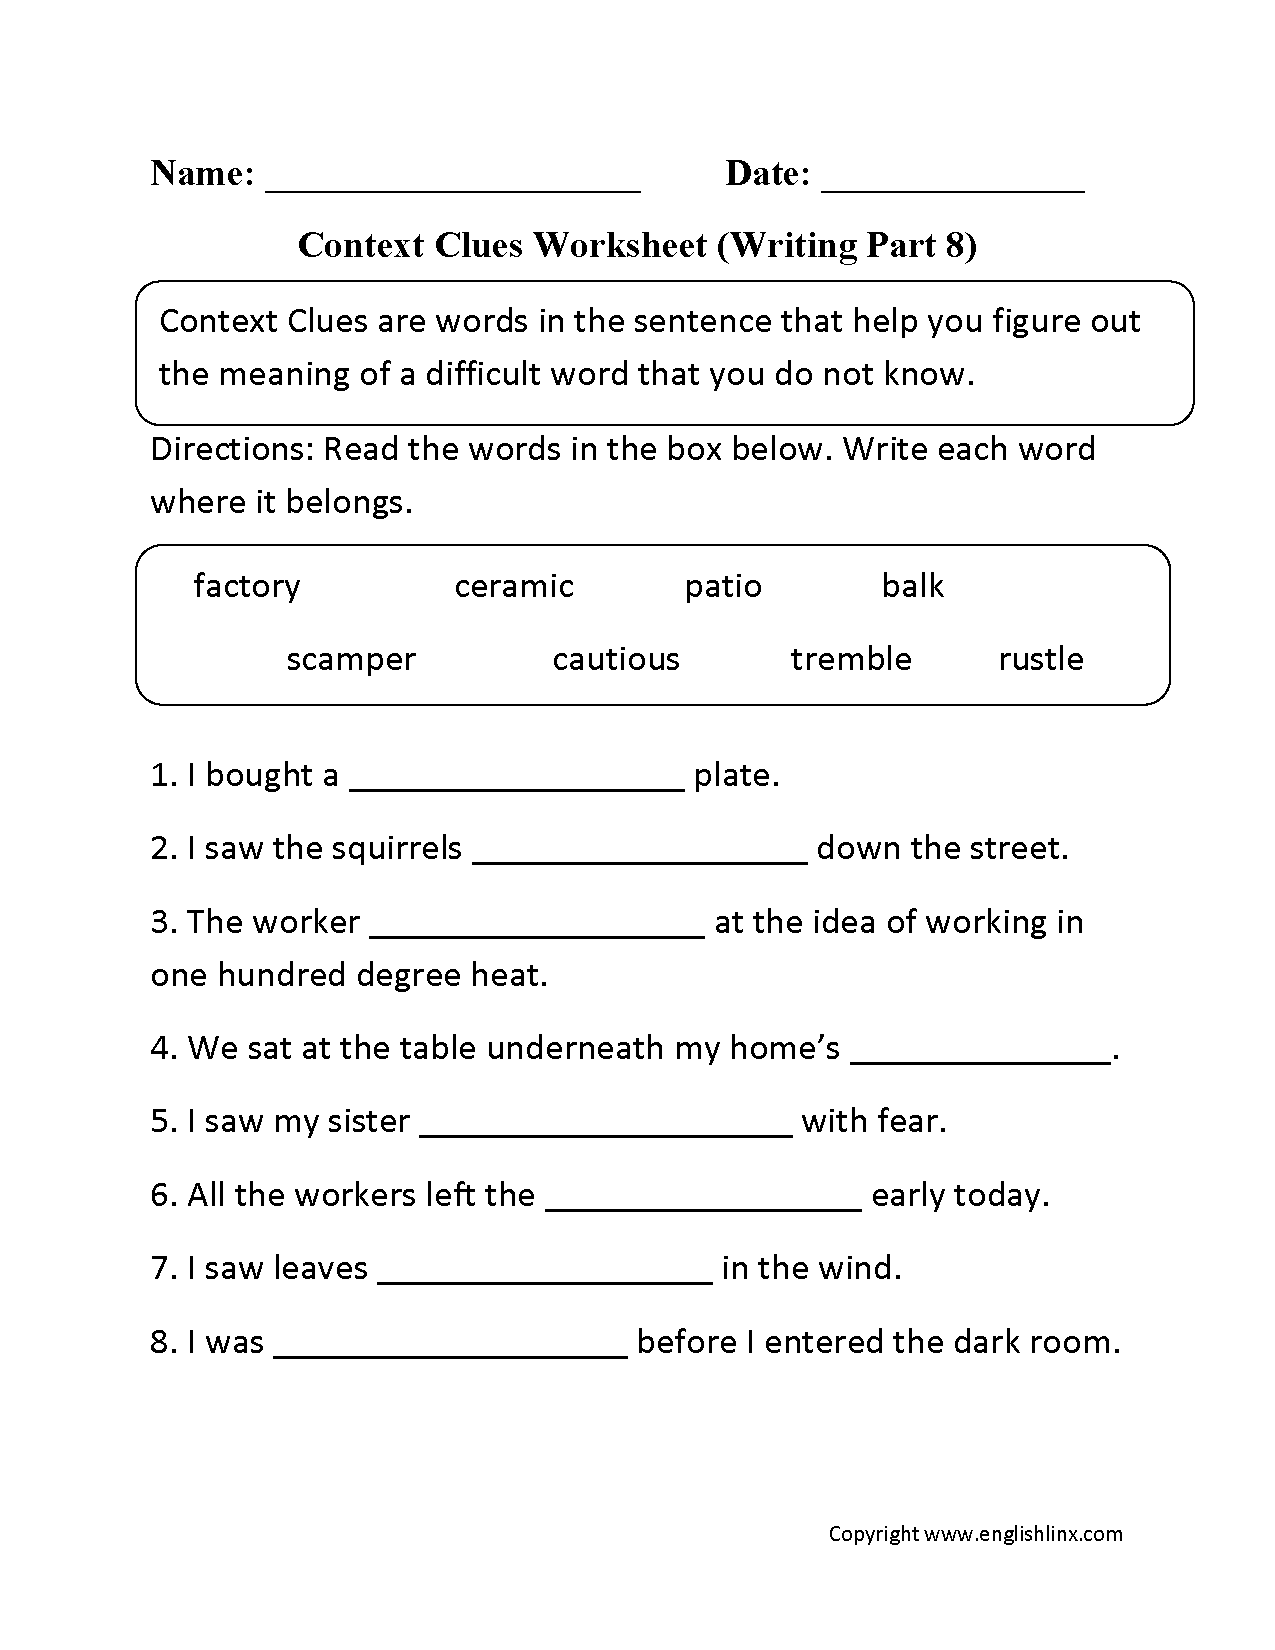 context-clues-worksheets-context-clues-worksheet-writing-part-8-intermediate